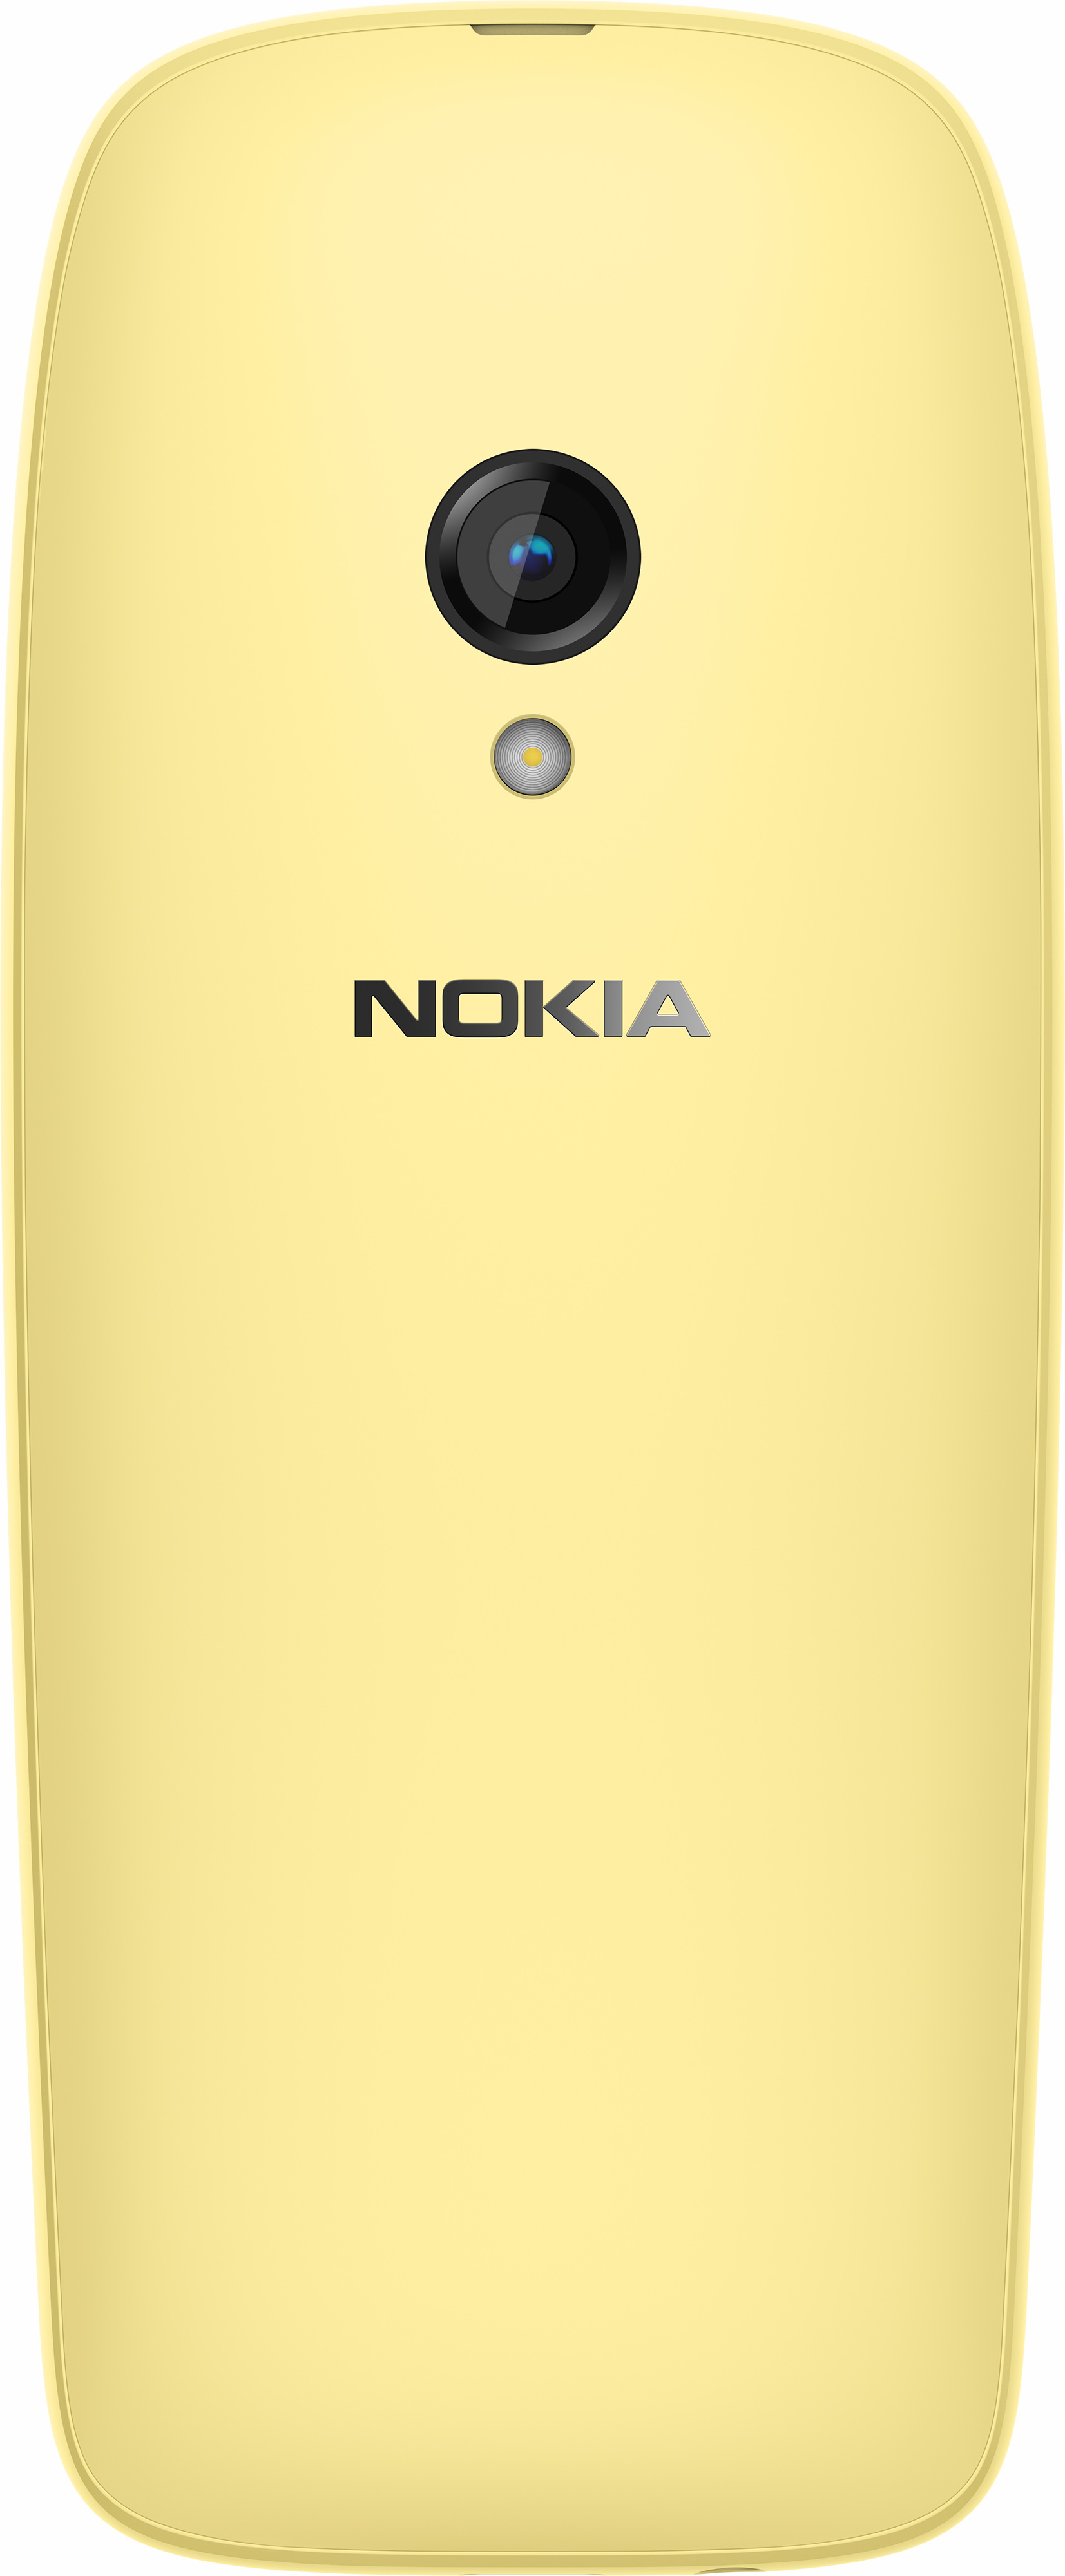  Анонс Nokia 6310 - очередное возрождение легенды Другие устройства  - anons_nokia_6310___esche_odno_vozrozhdenie_zabytoj_legendy_3